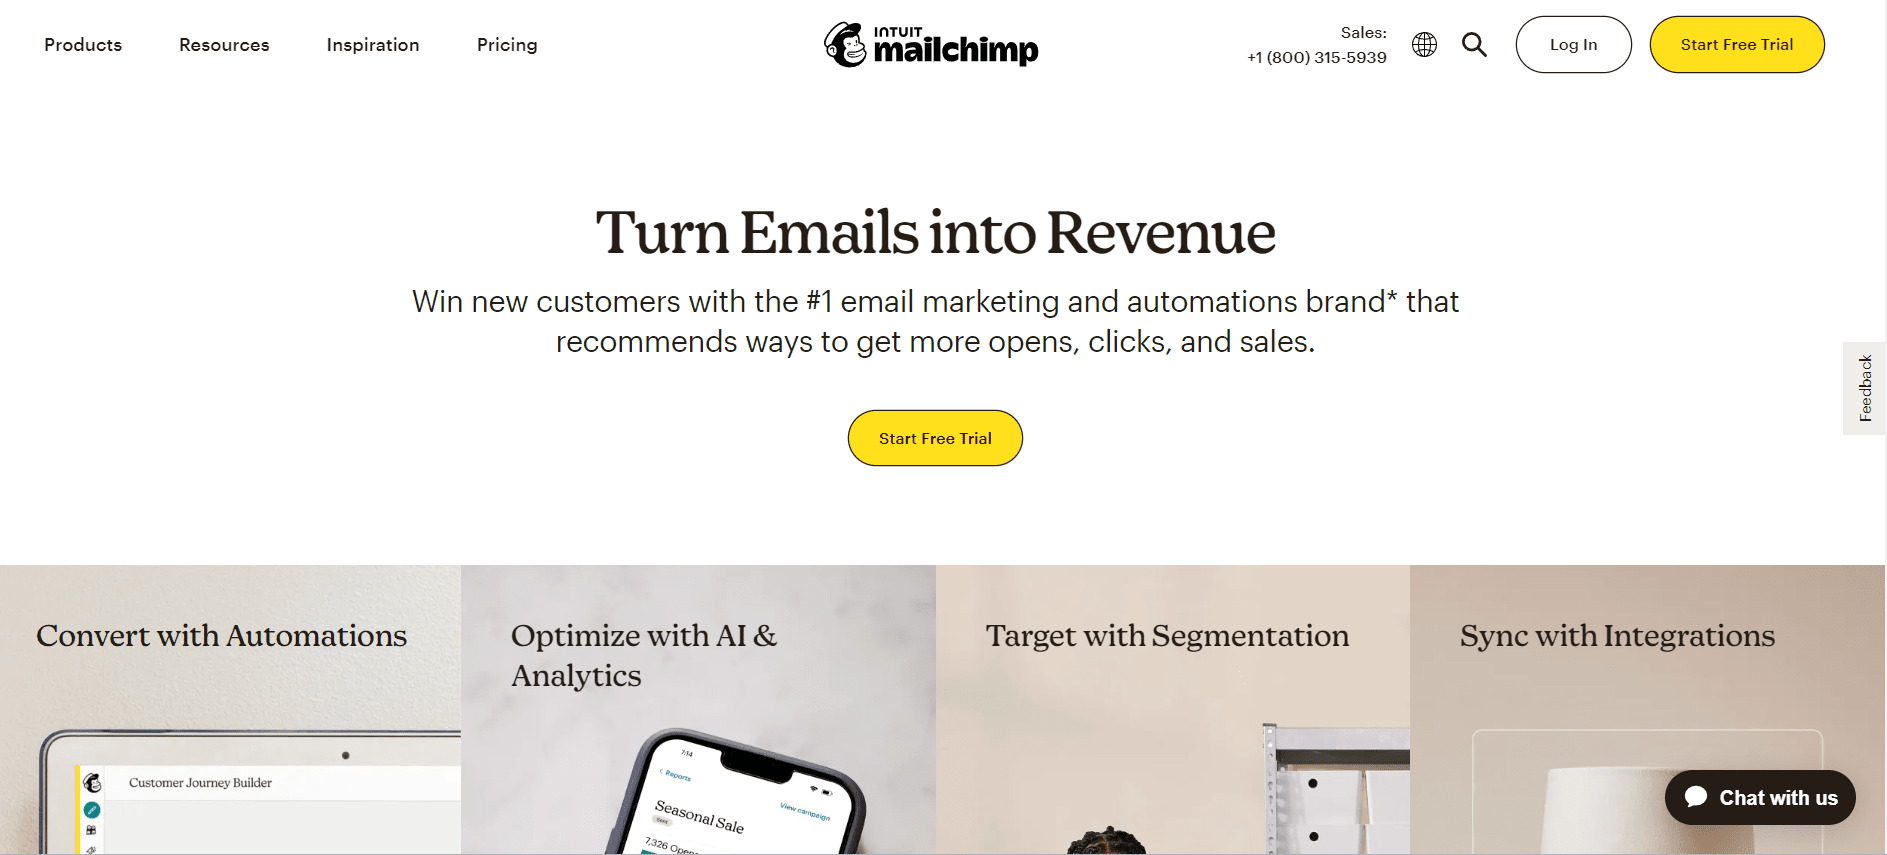 MailChimp Overview